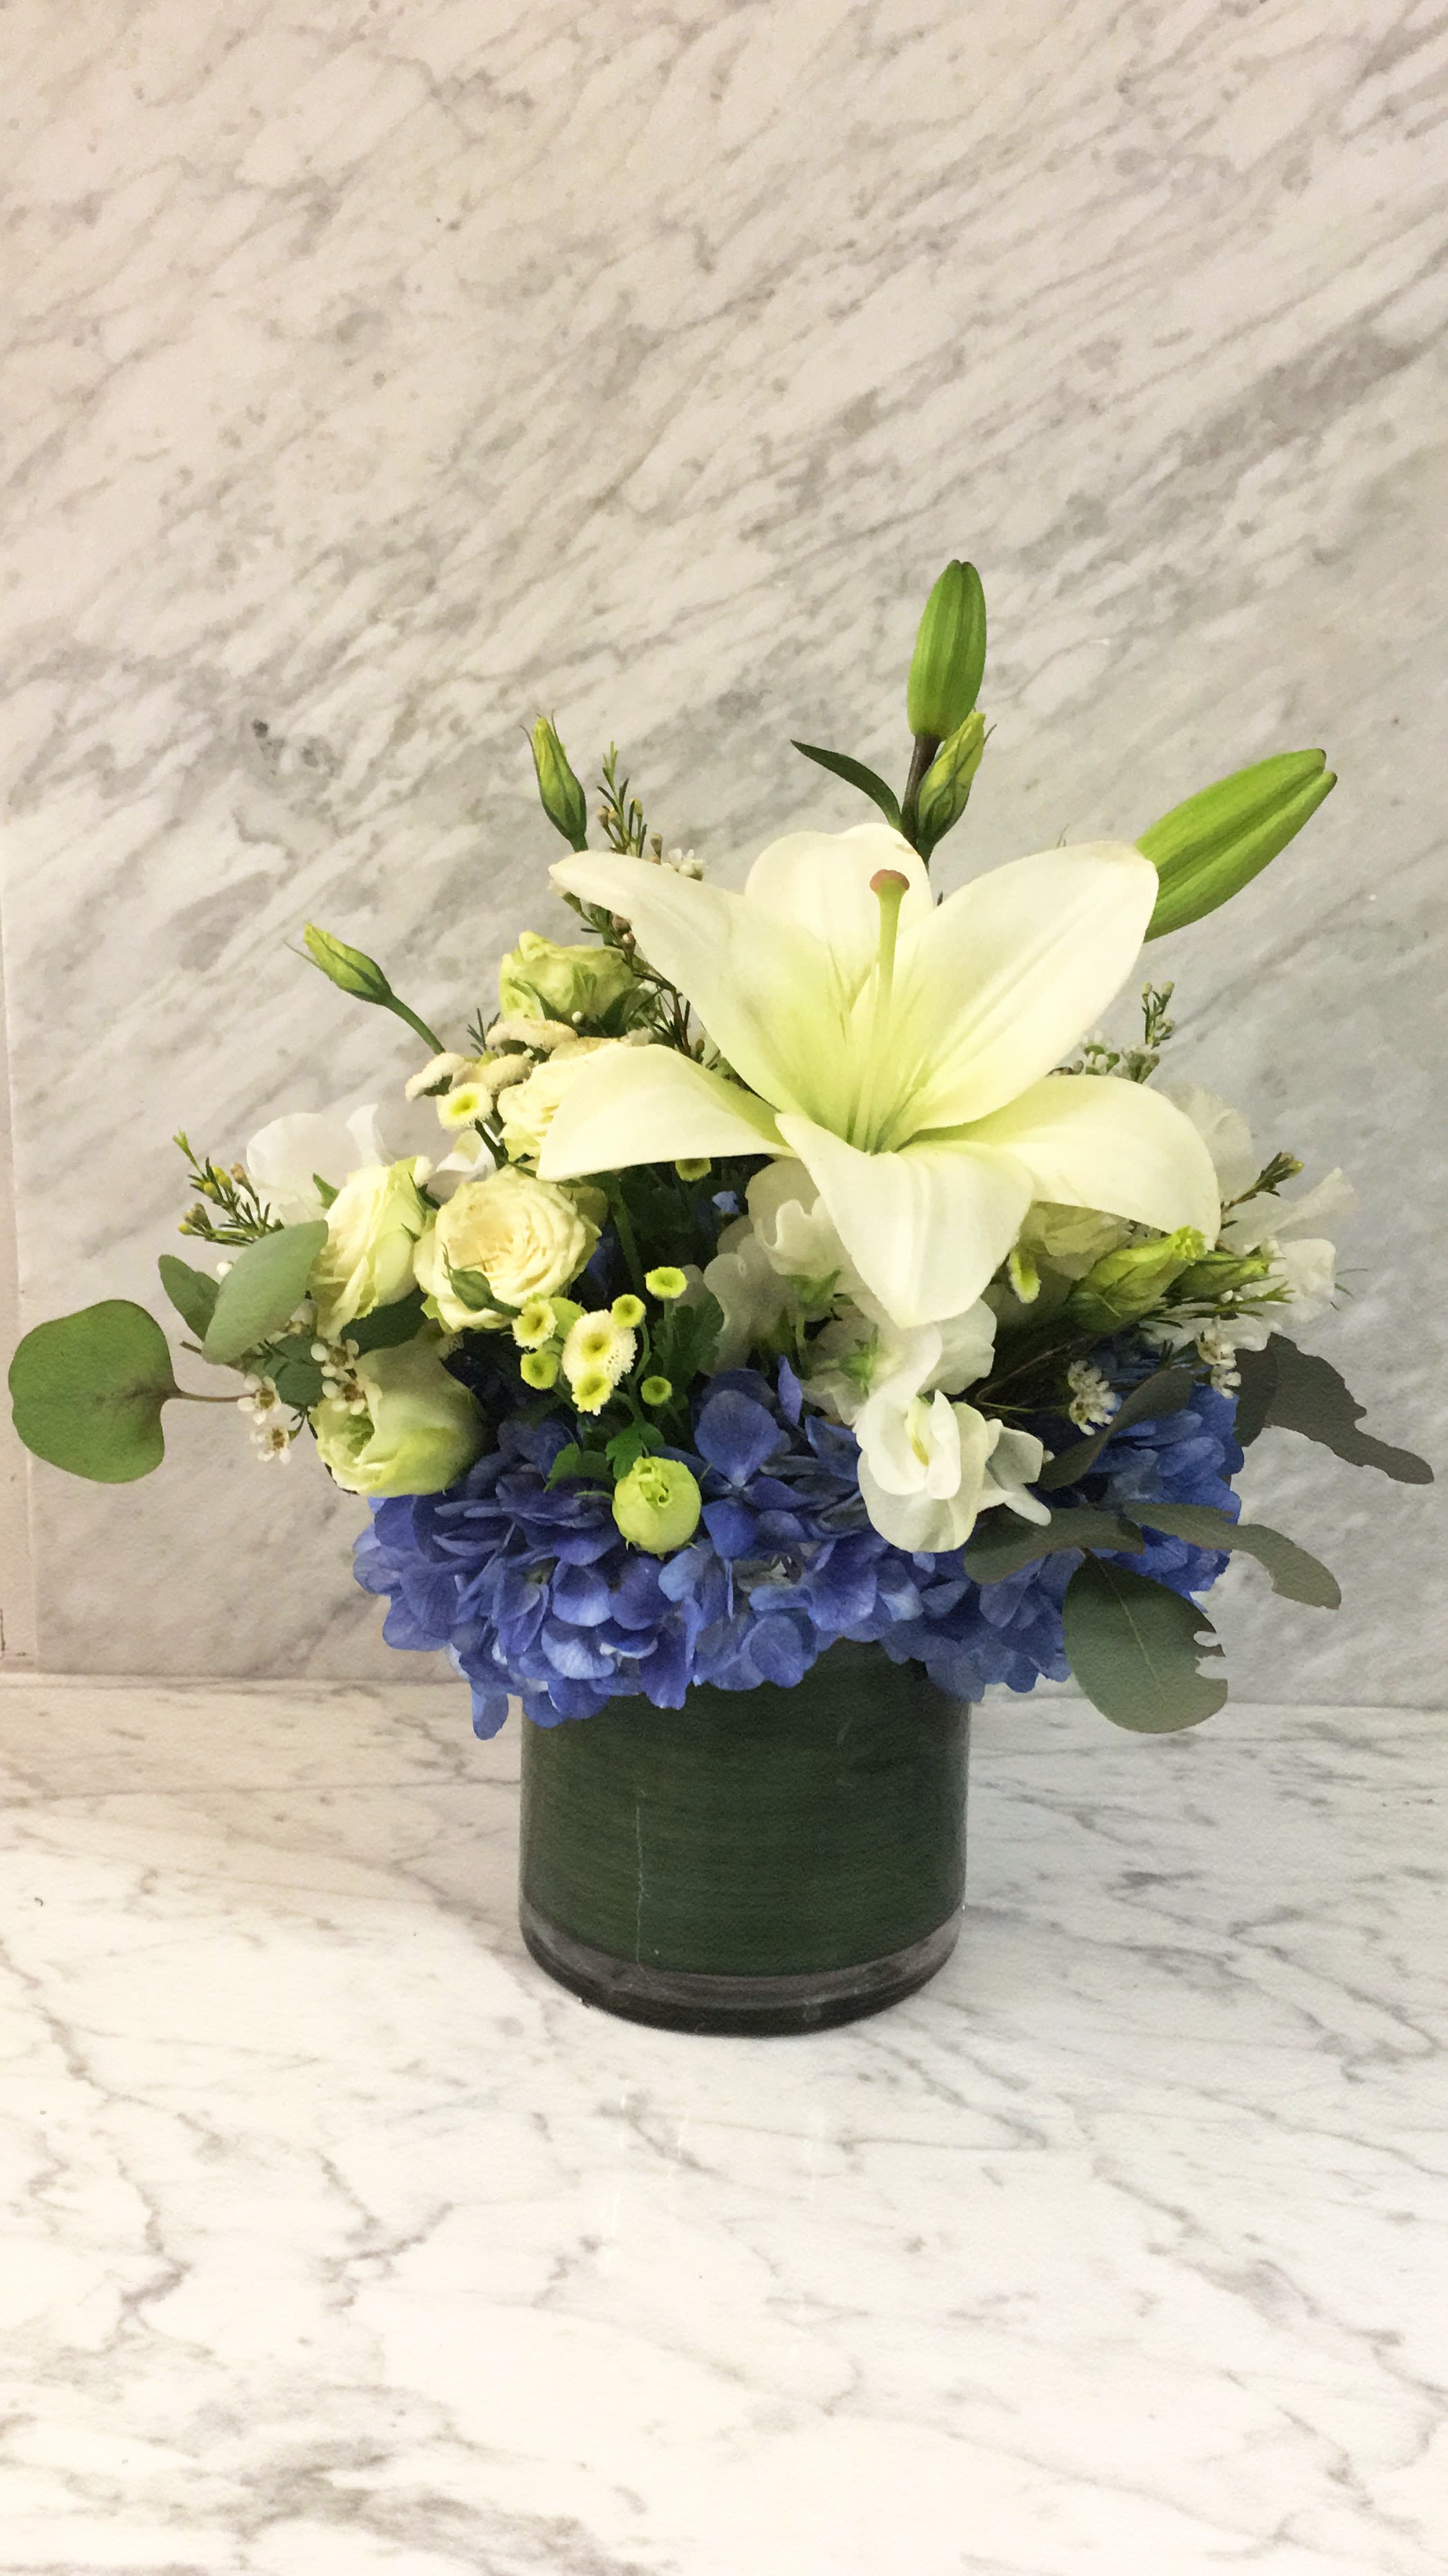 Ocean Blue  - This arrangement may contain white lily, lisithiums, blue hydrangea, white foliage glass vase arrangement. 